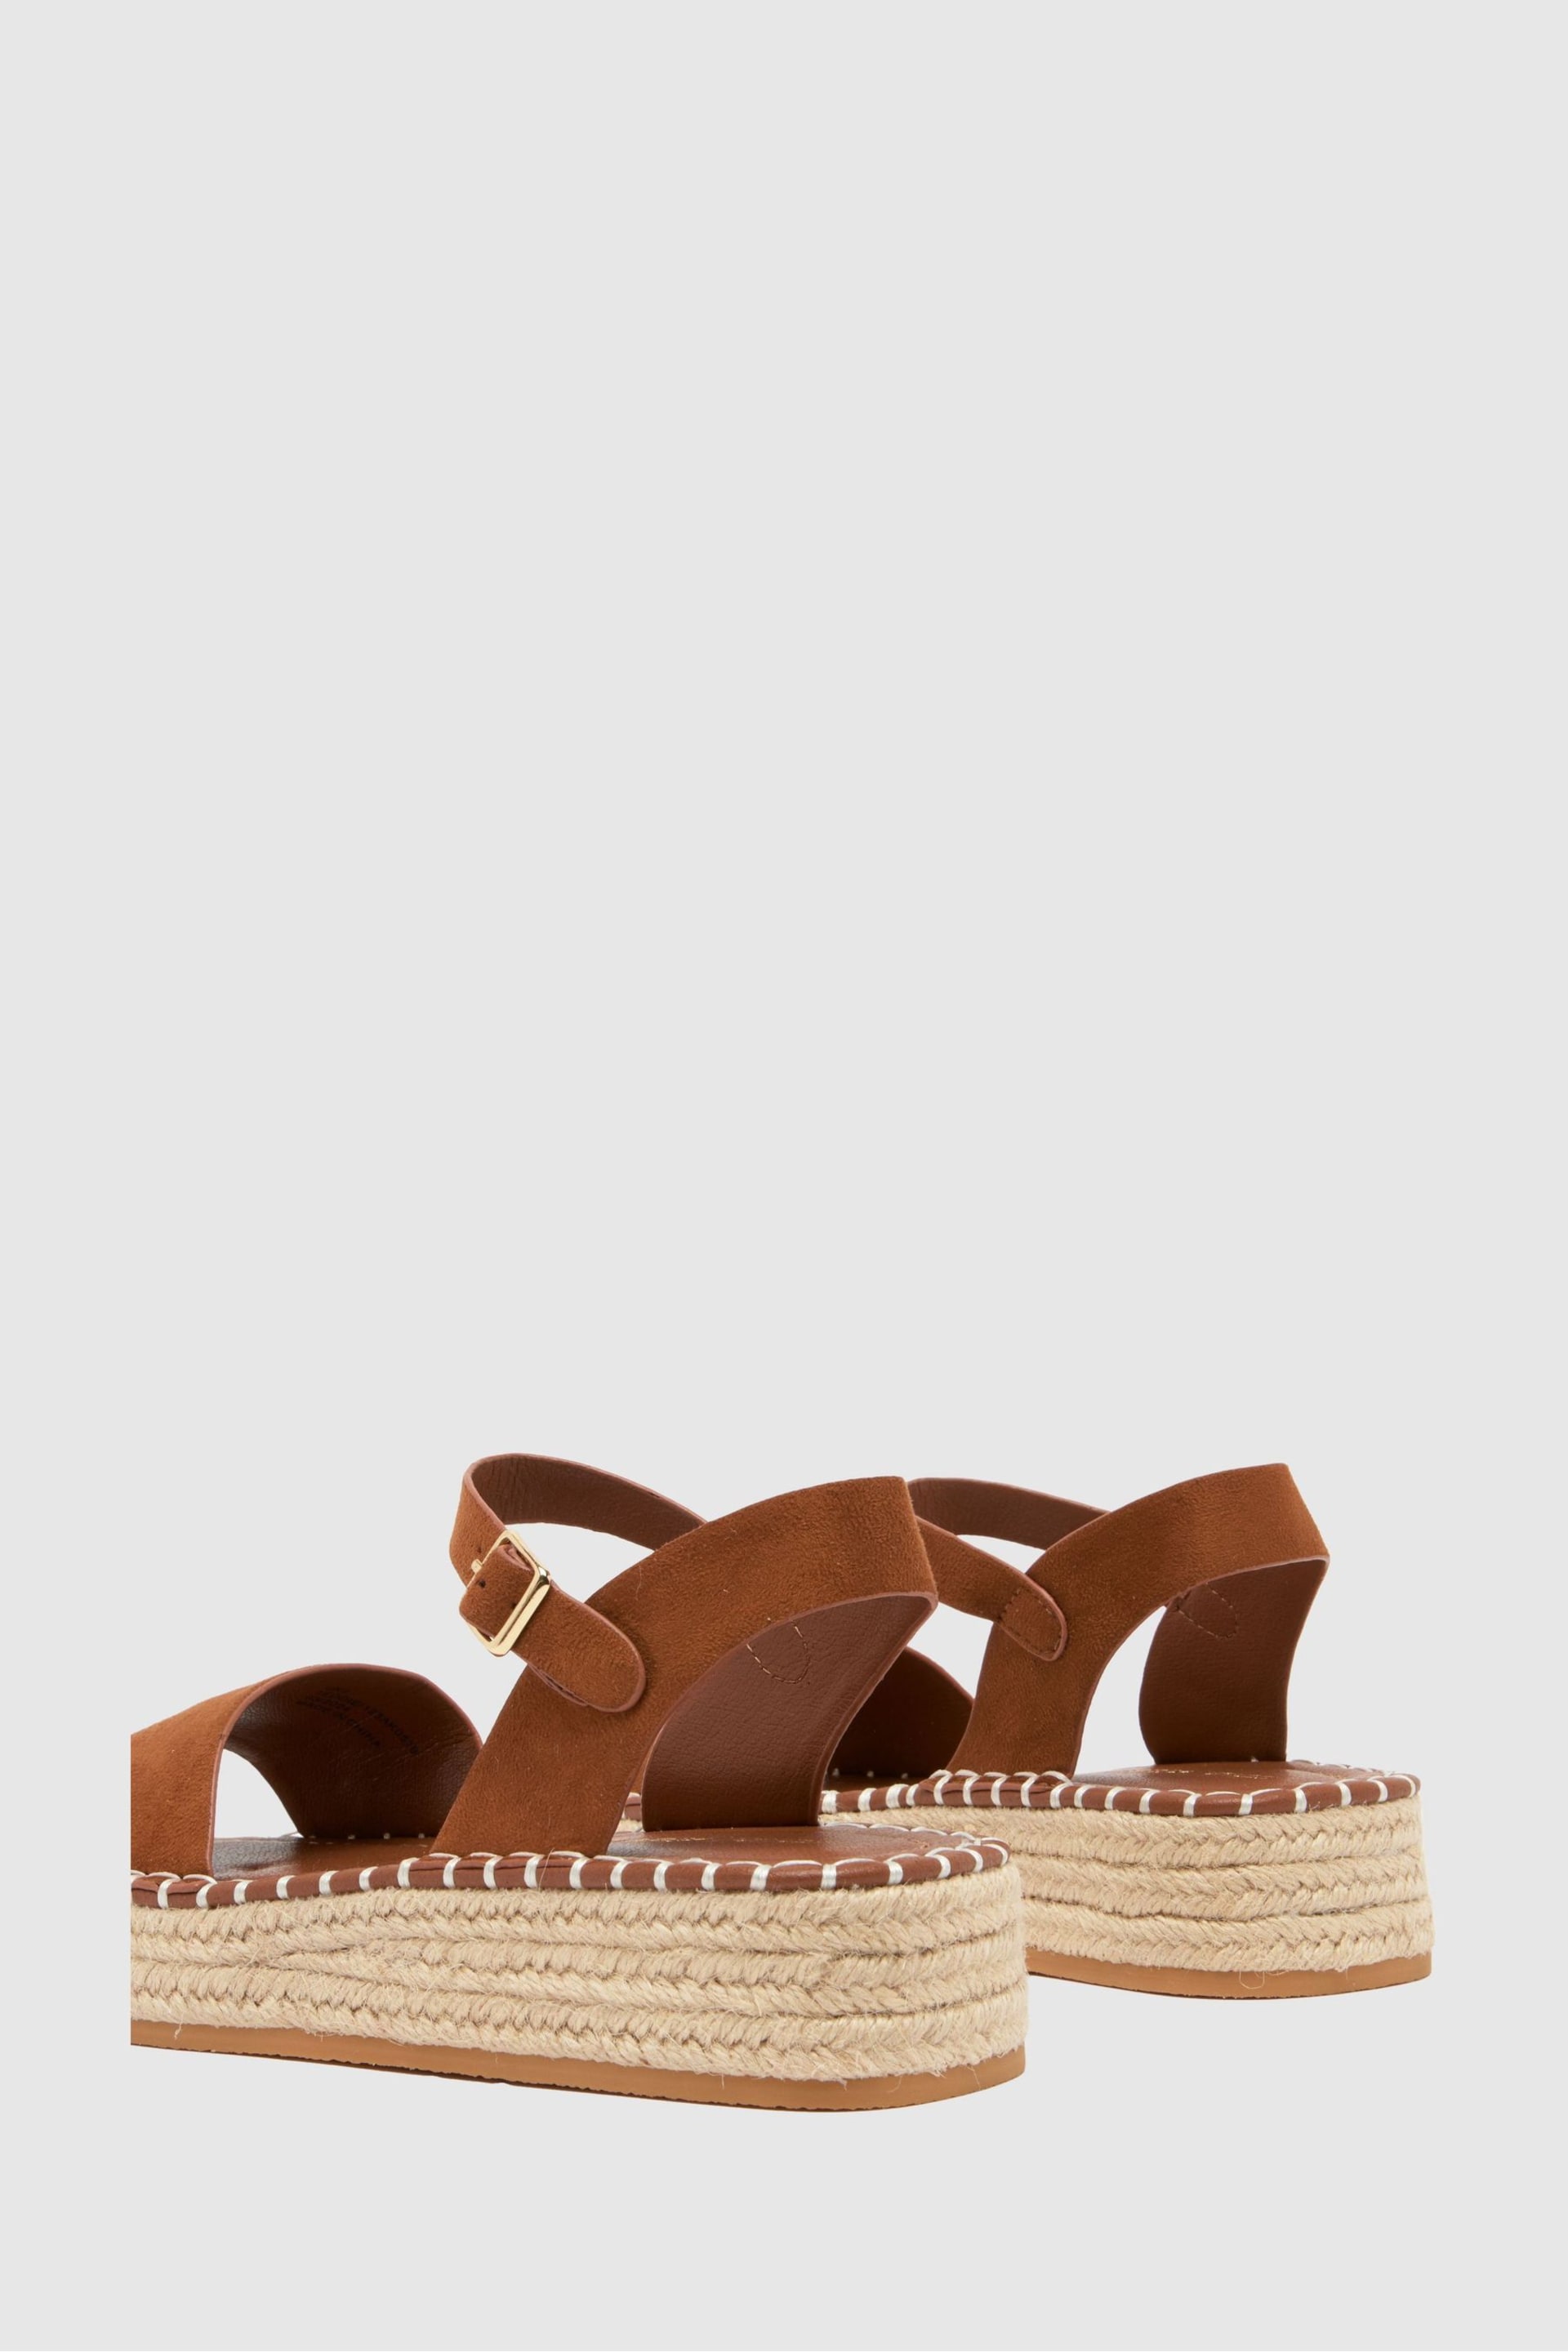 Schuh Teddie Sandals - Image 4 of 4